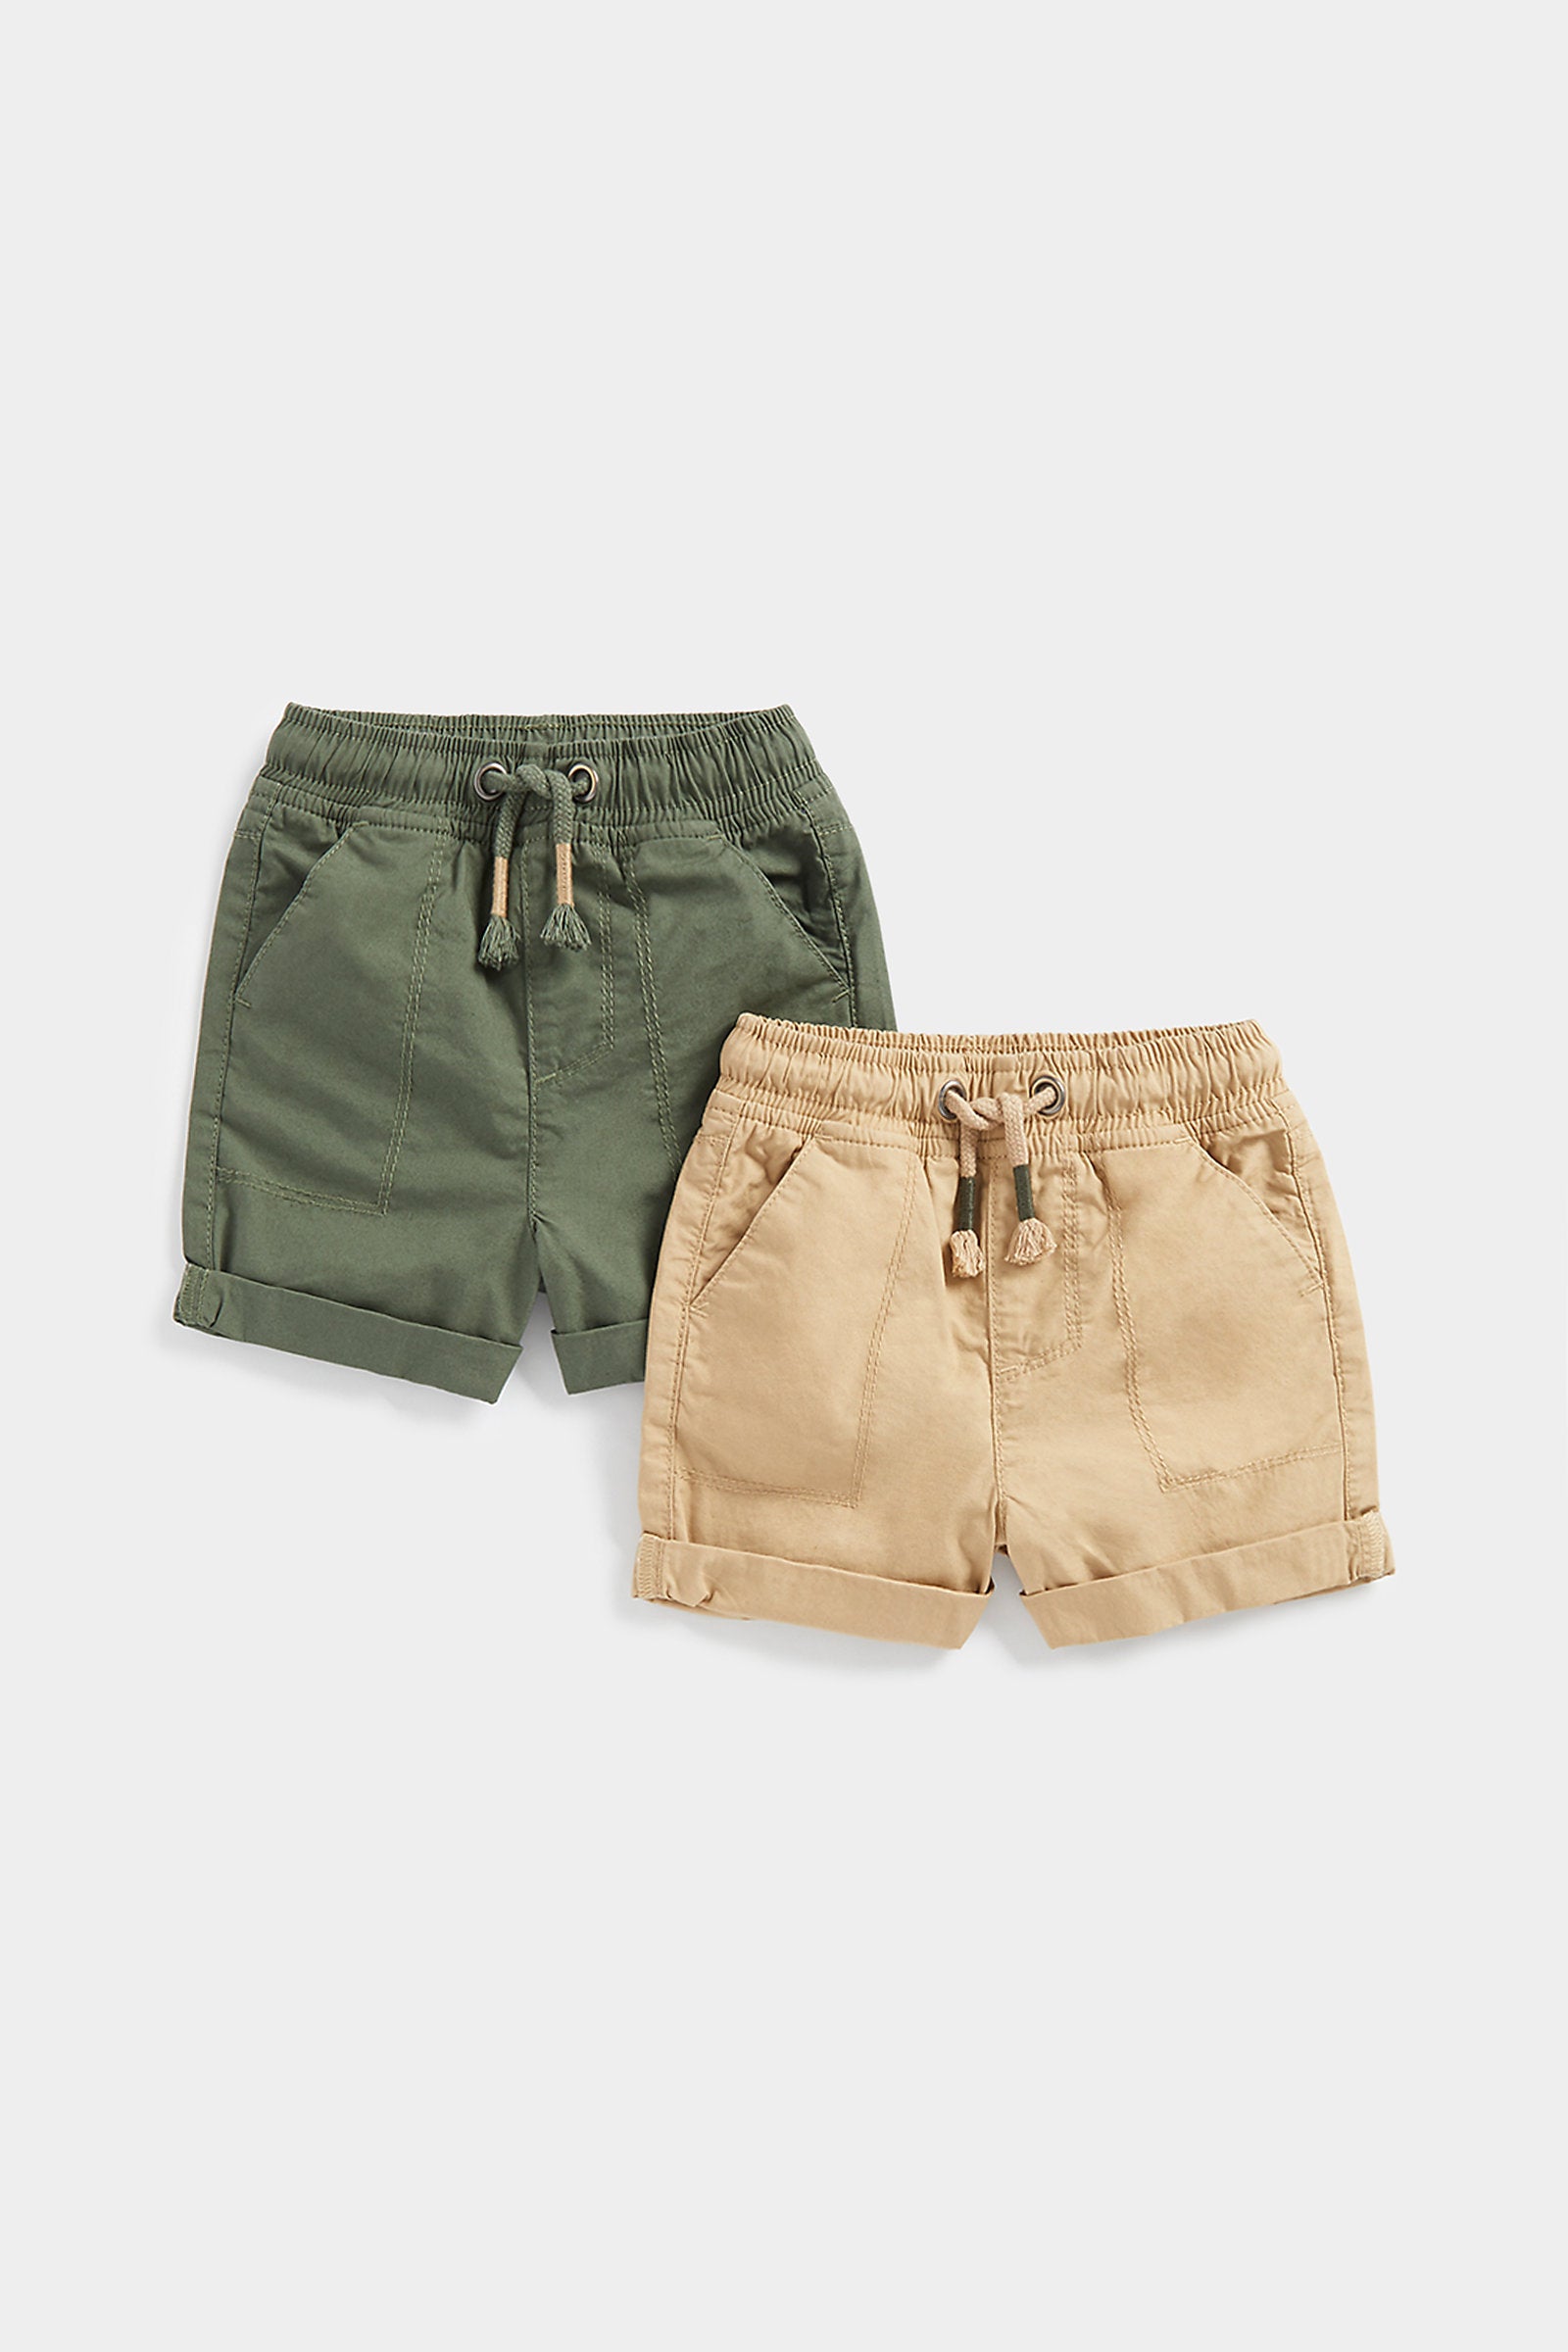 Mothercare Khaki and Tan Poplin Shorts - 2 Pack